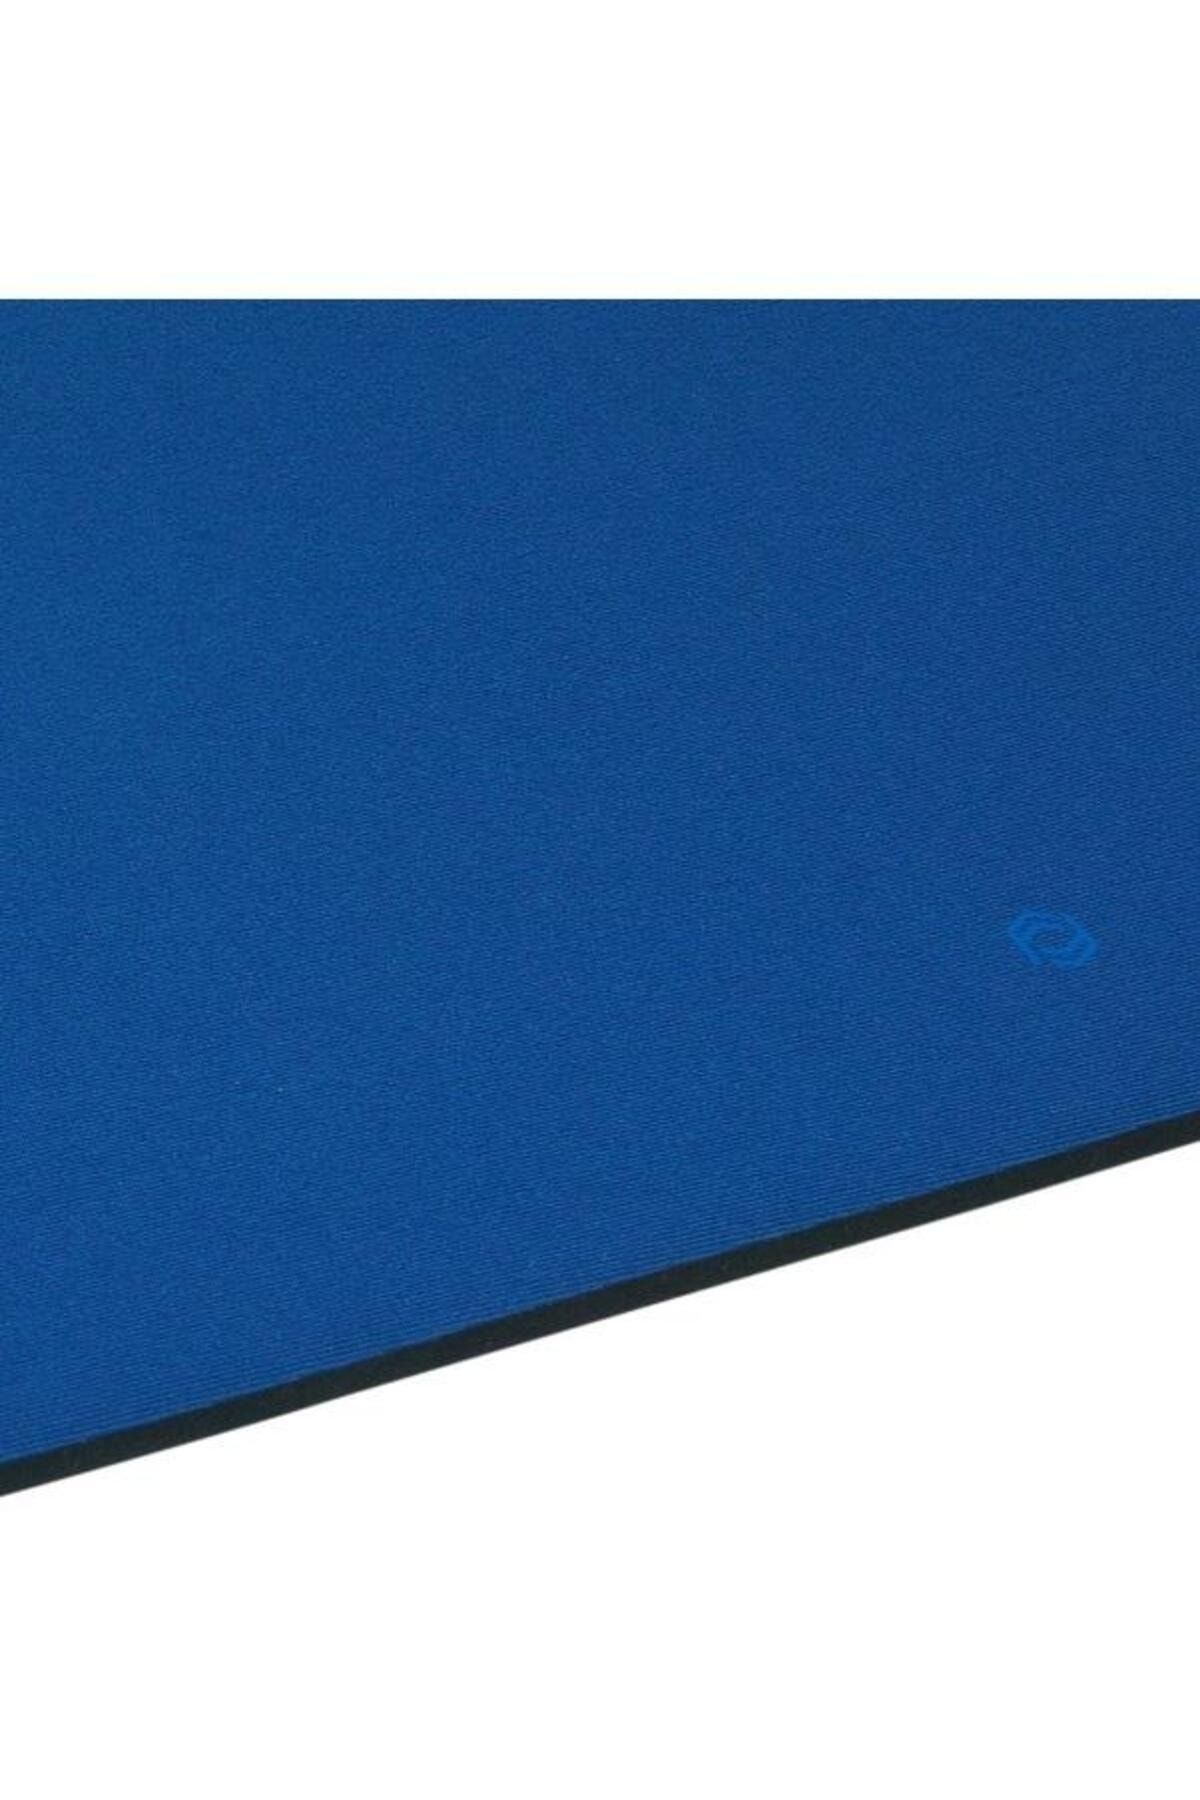 Frisby Fmp-760-m Mouse Pad Kumaş Mavi